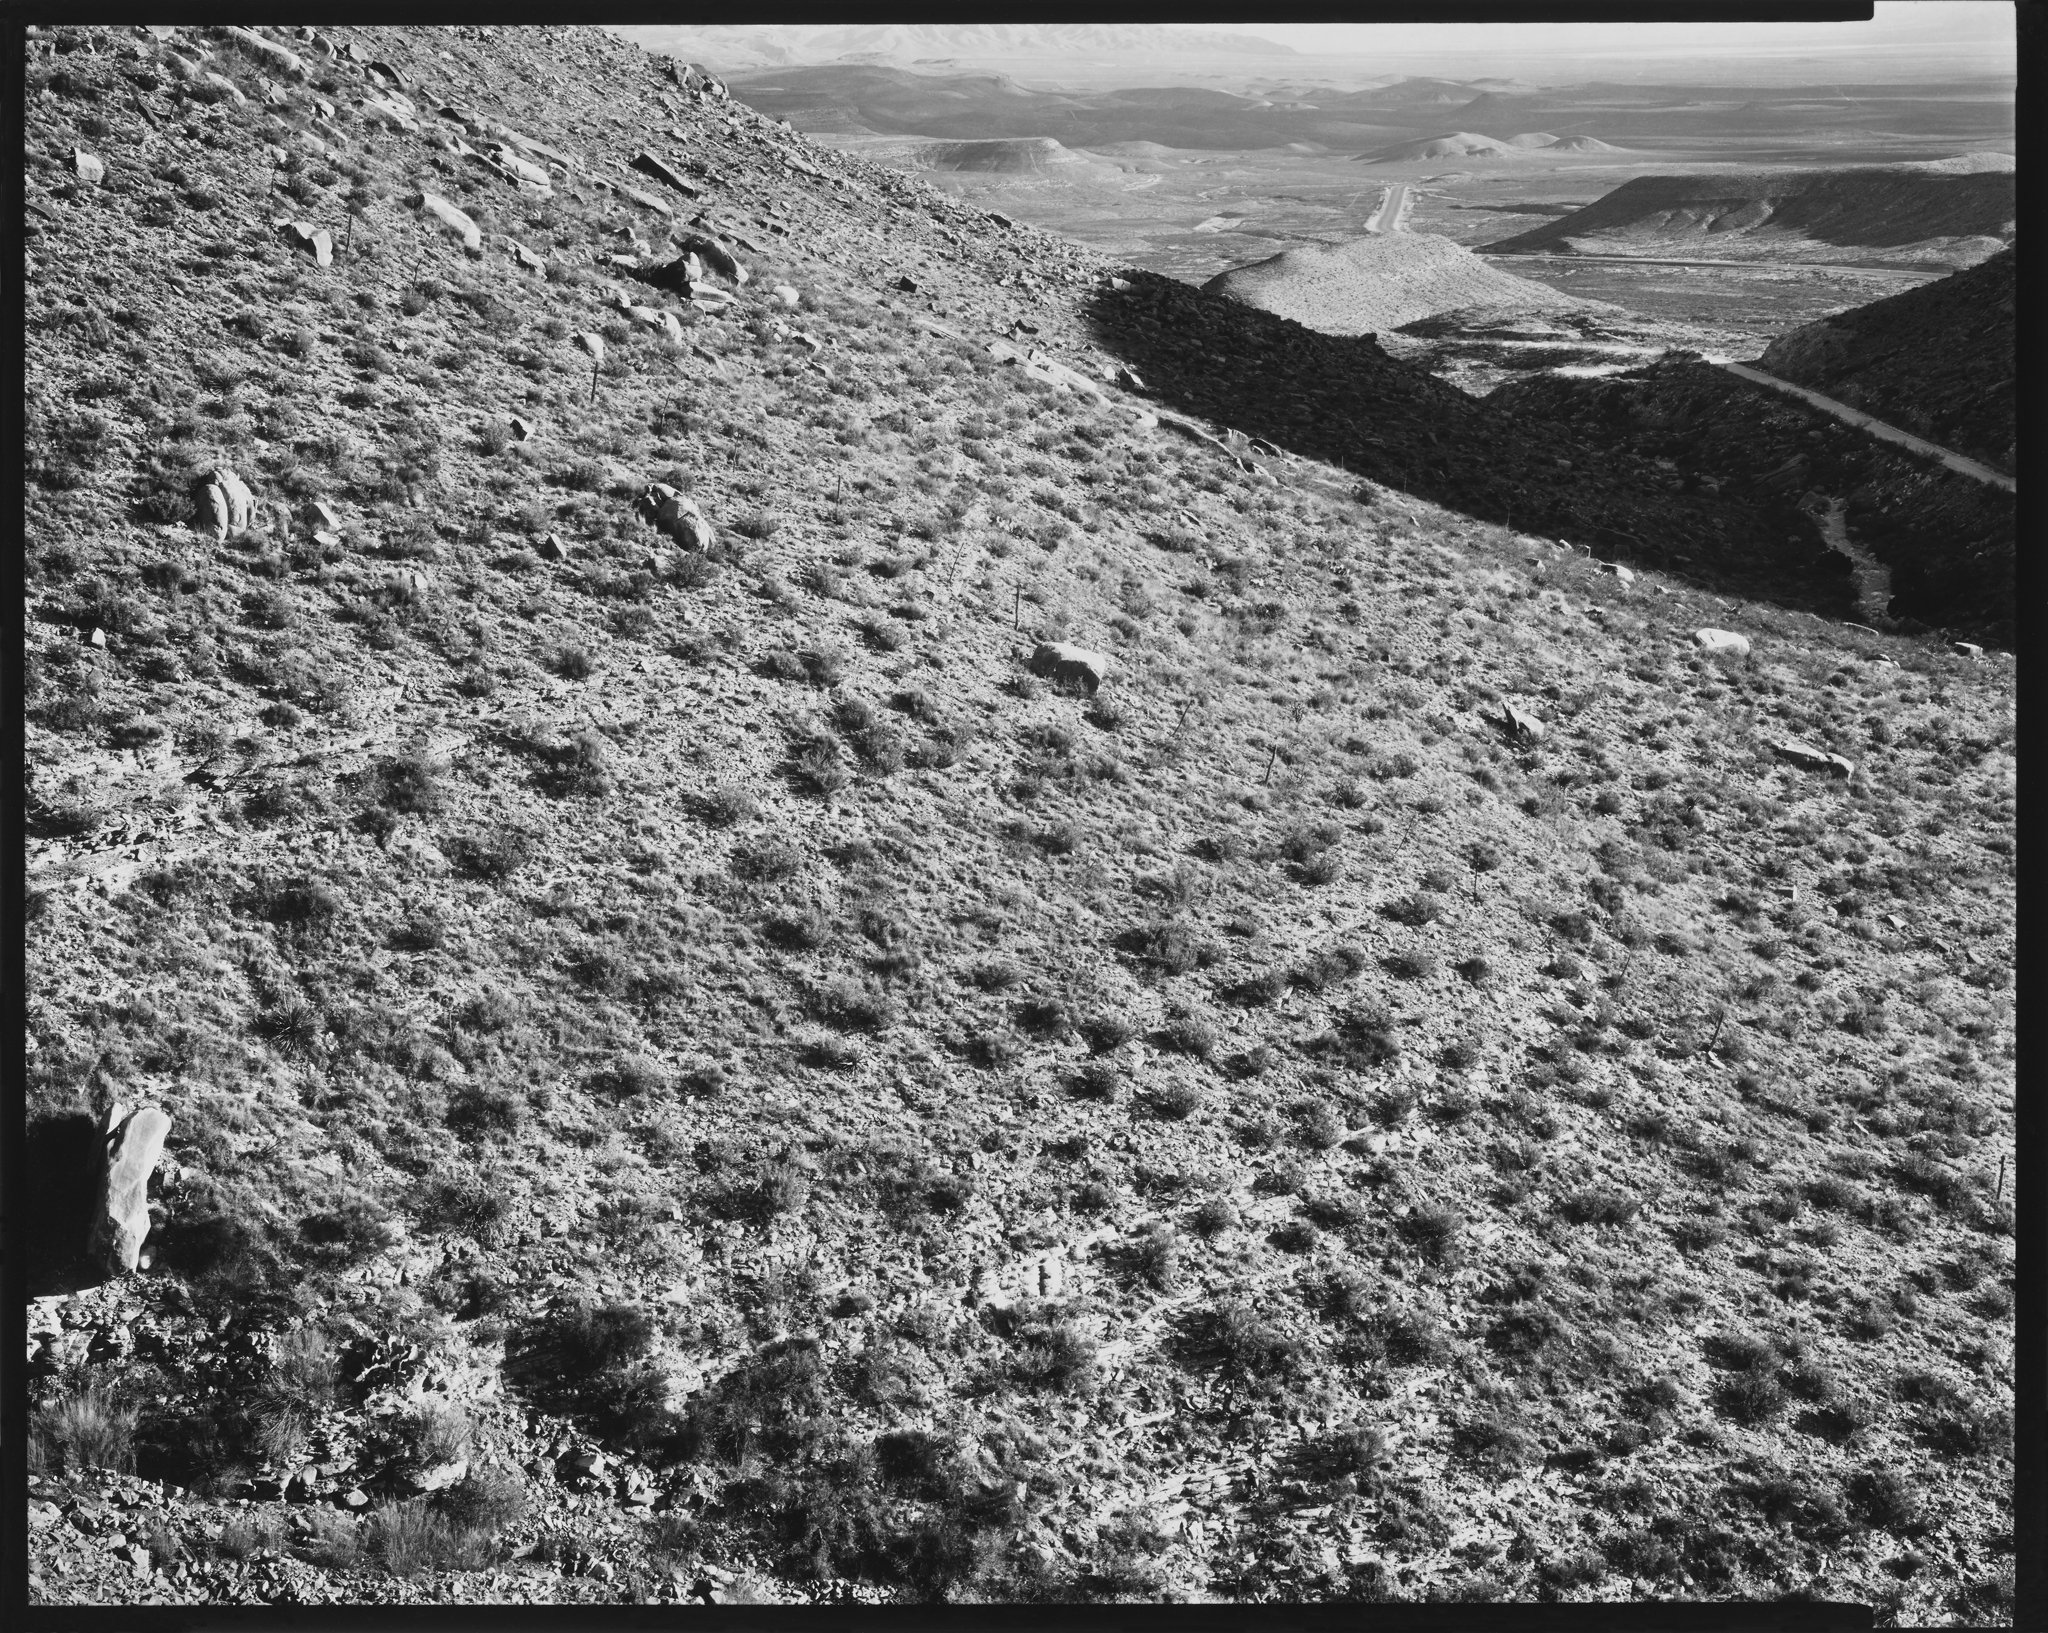 American Landscapes Portfolio_Guadalupe Mountains, Texas_1981 © Nick Merrick.jpg